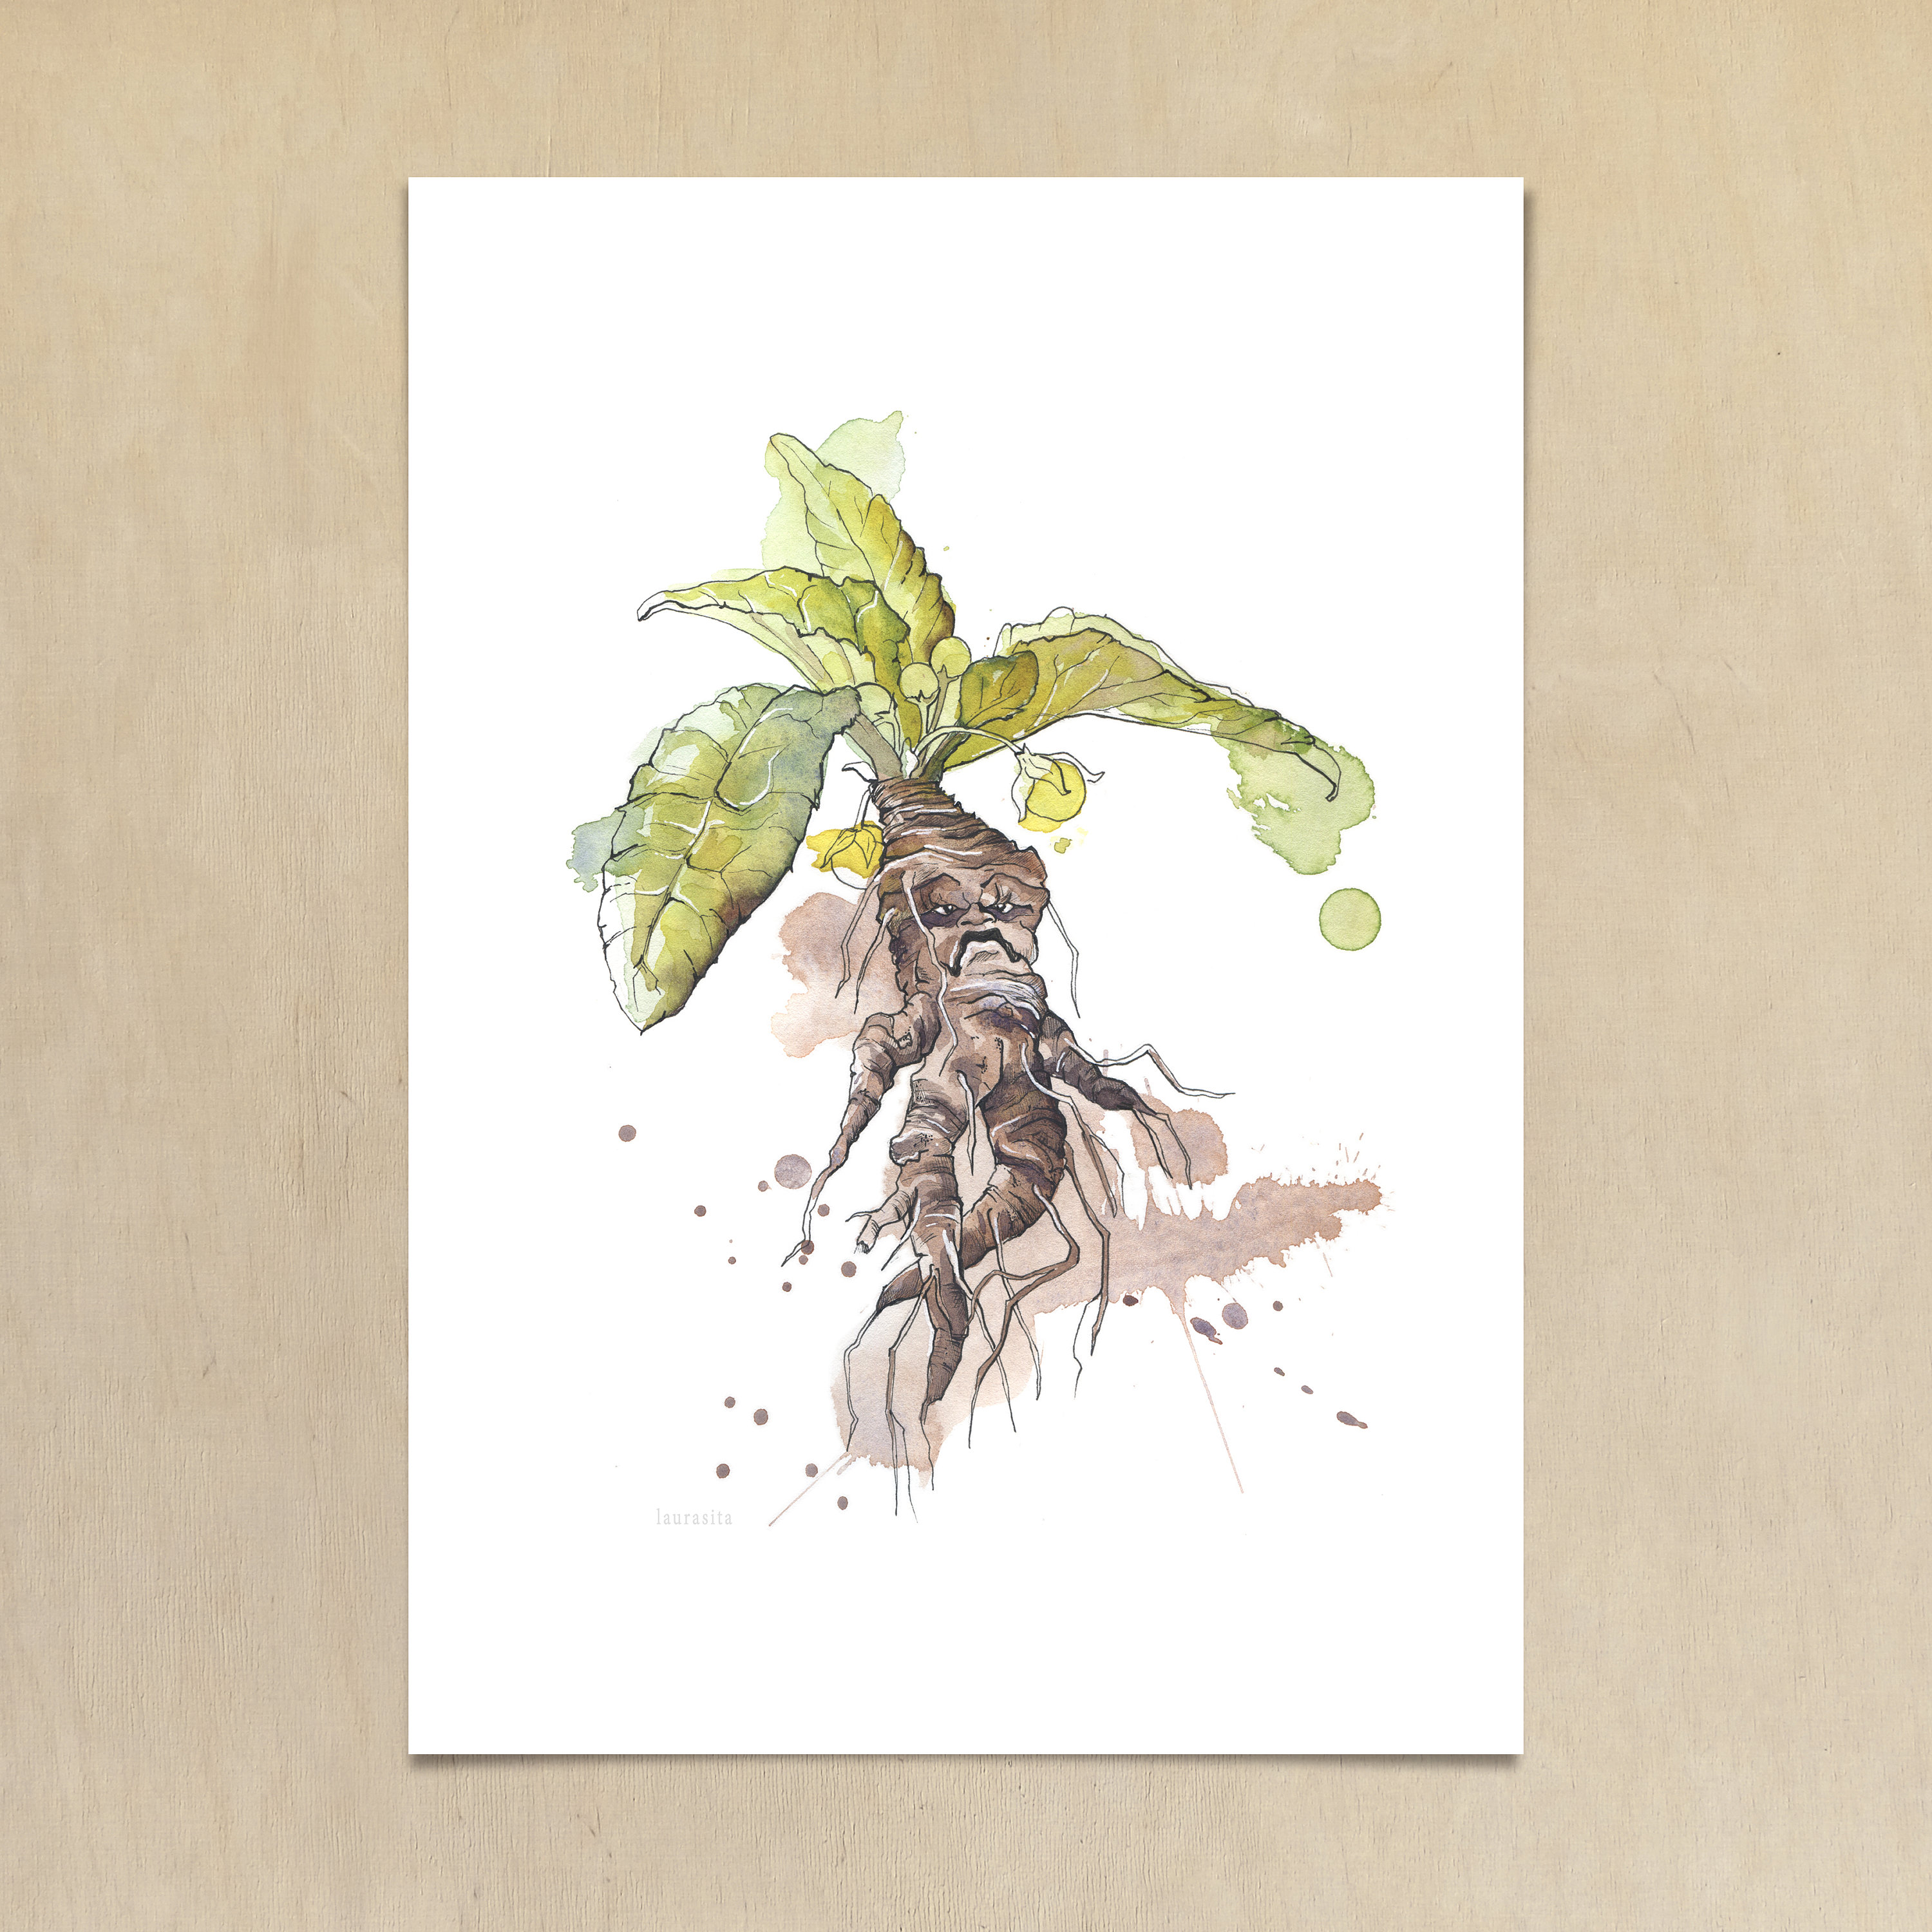 Mandrake prints Botanical illustration A4 -  Portugal